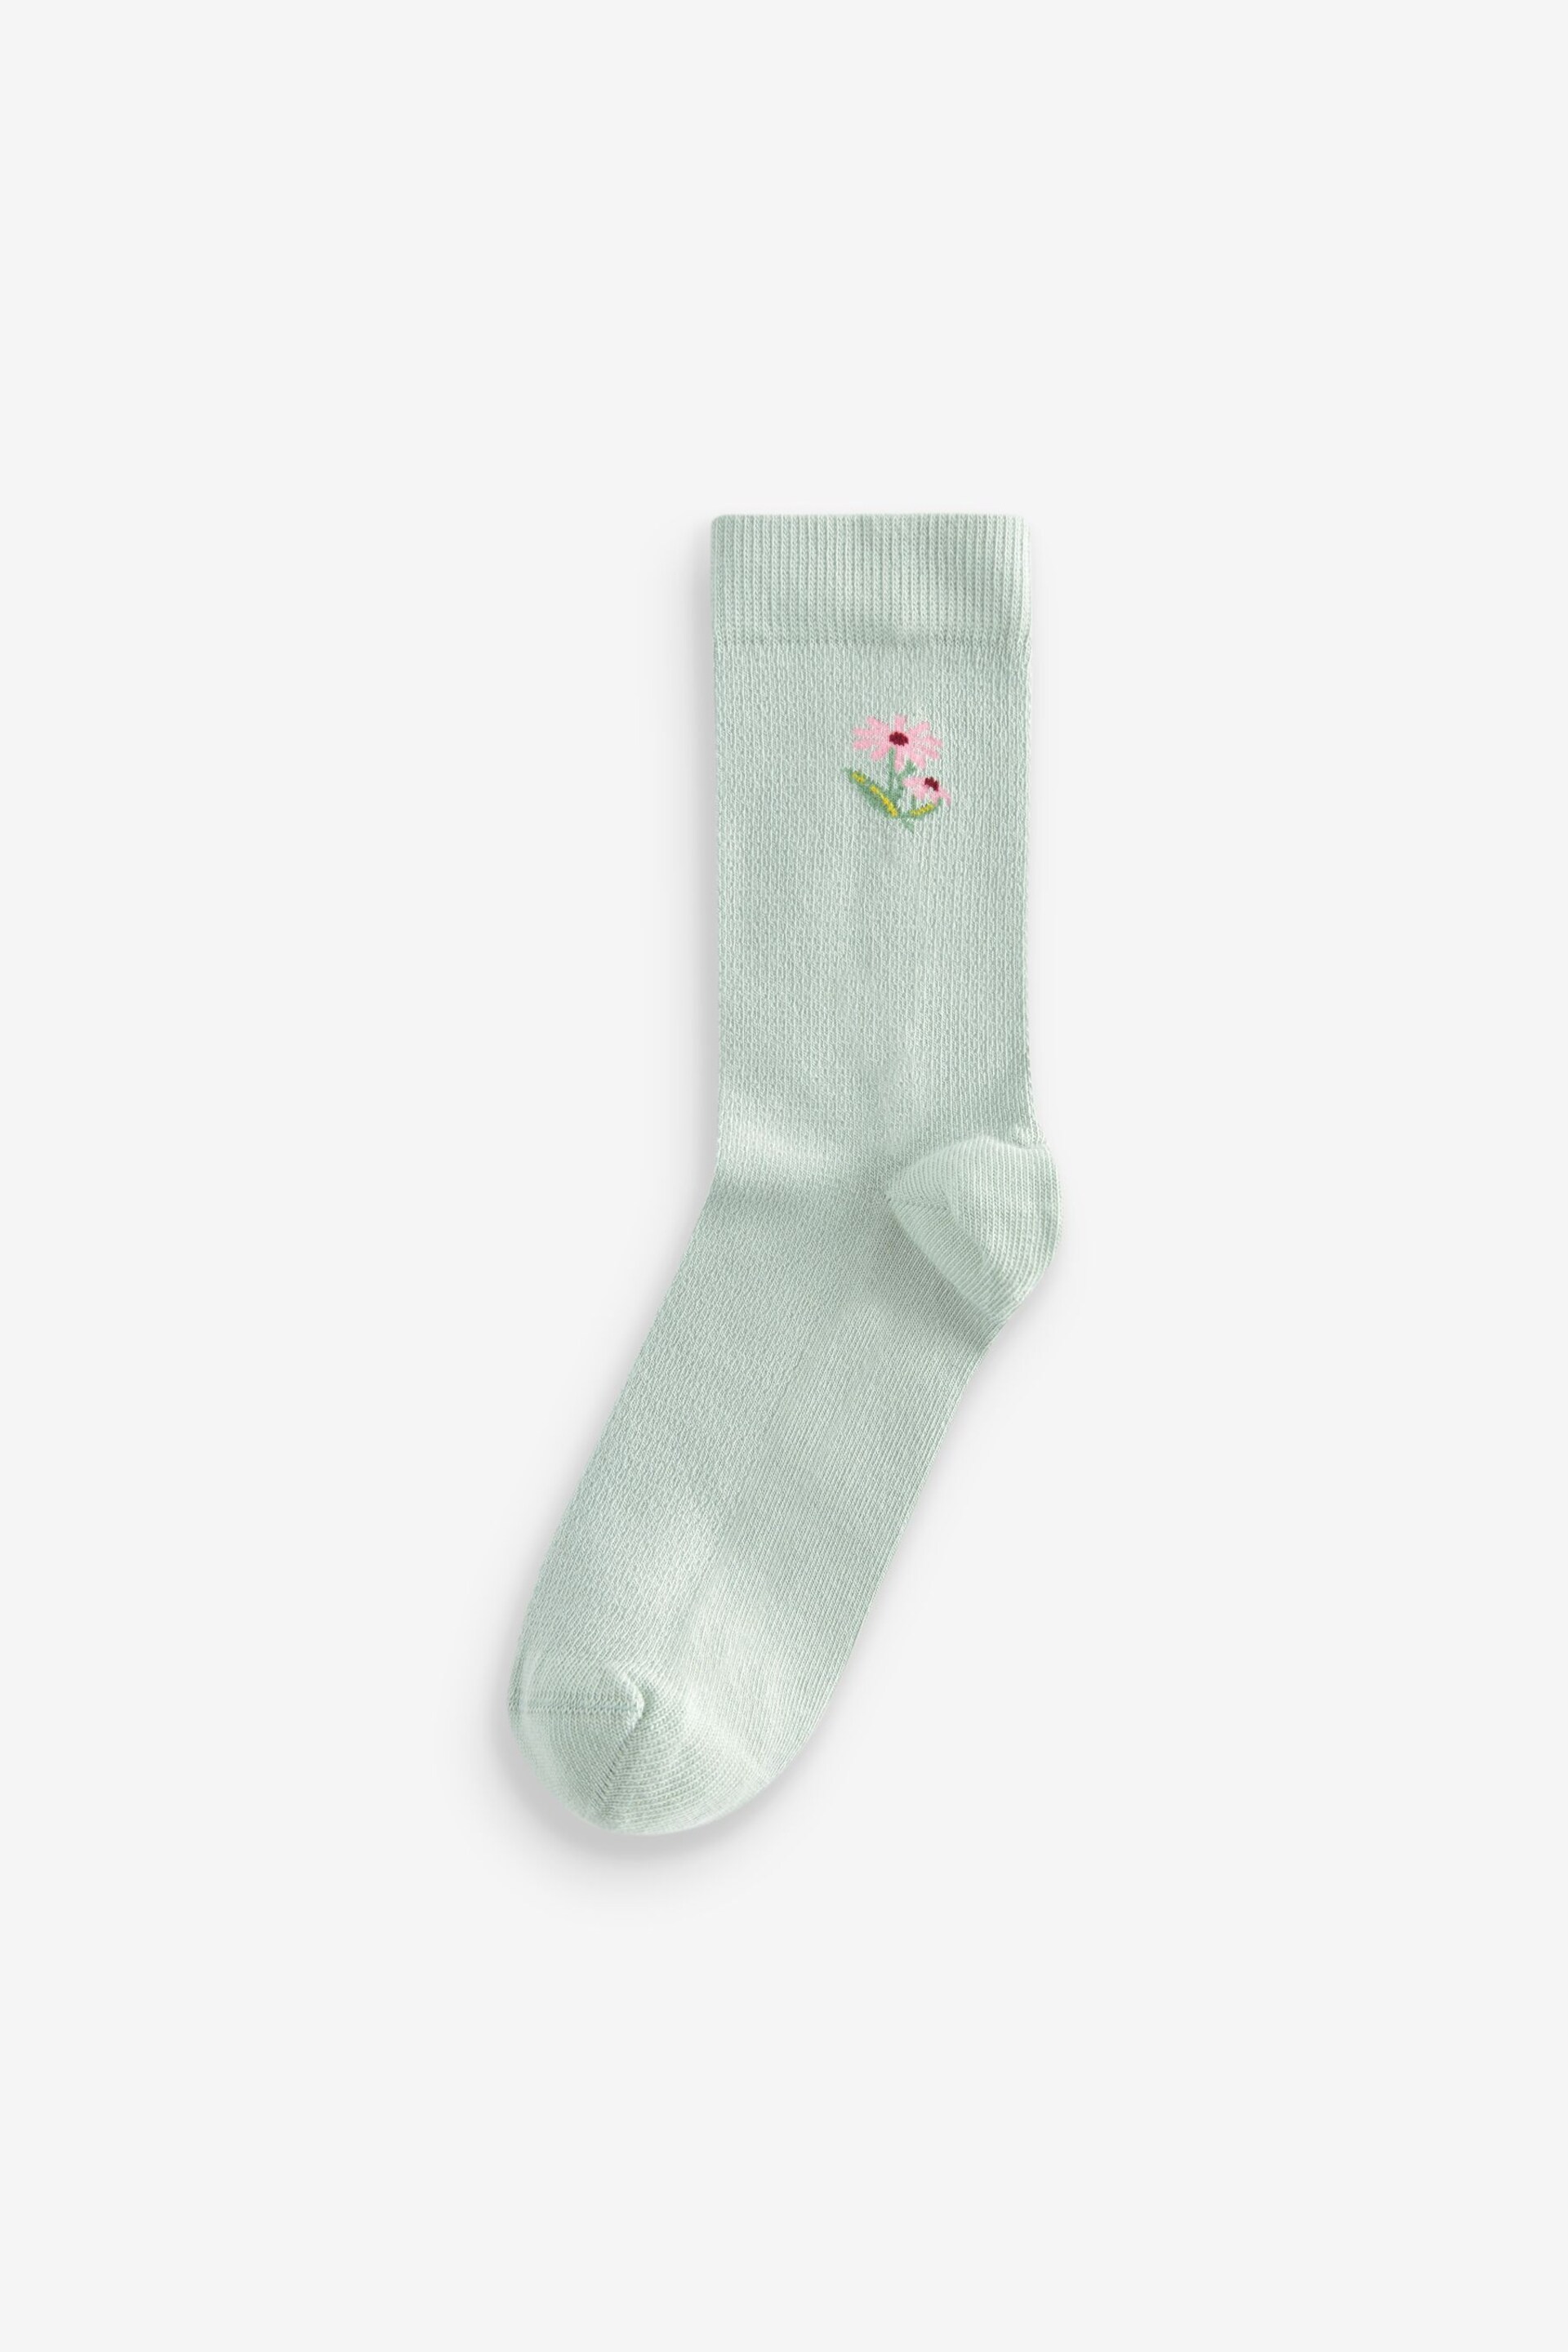 Navy Floral Ankle Socks 4 Pack - Image 5 of 6